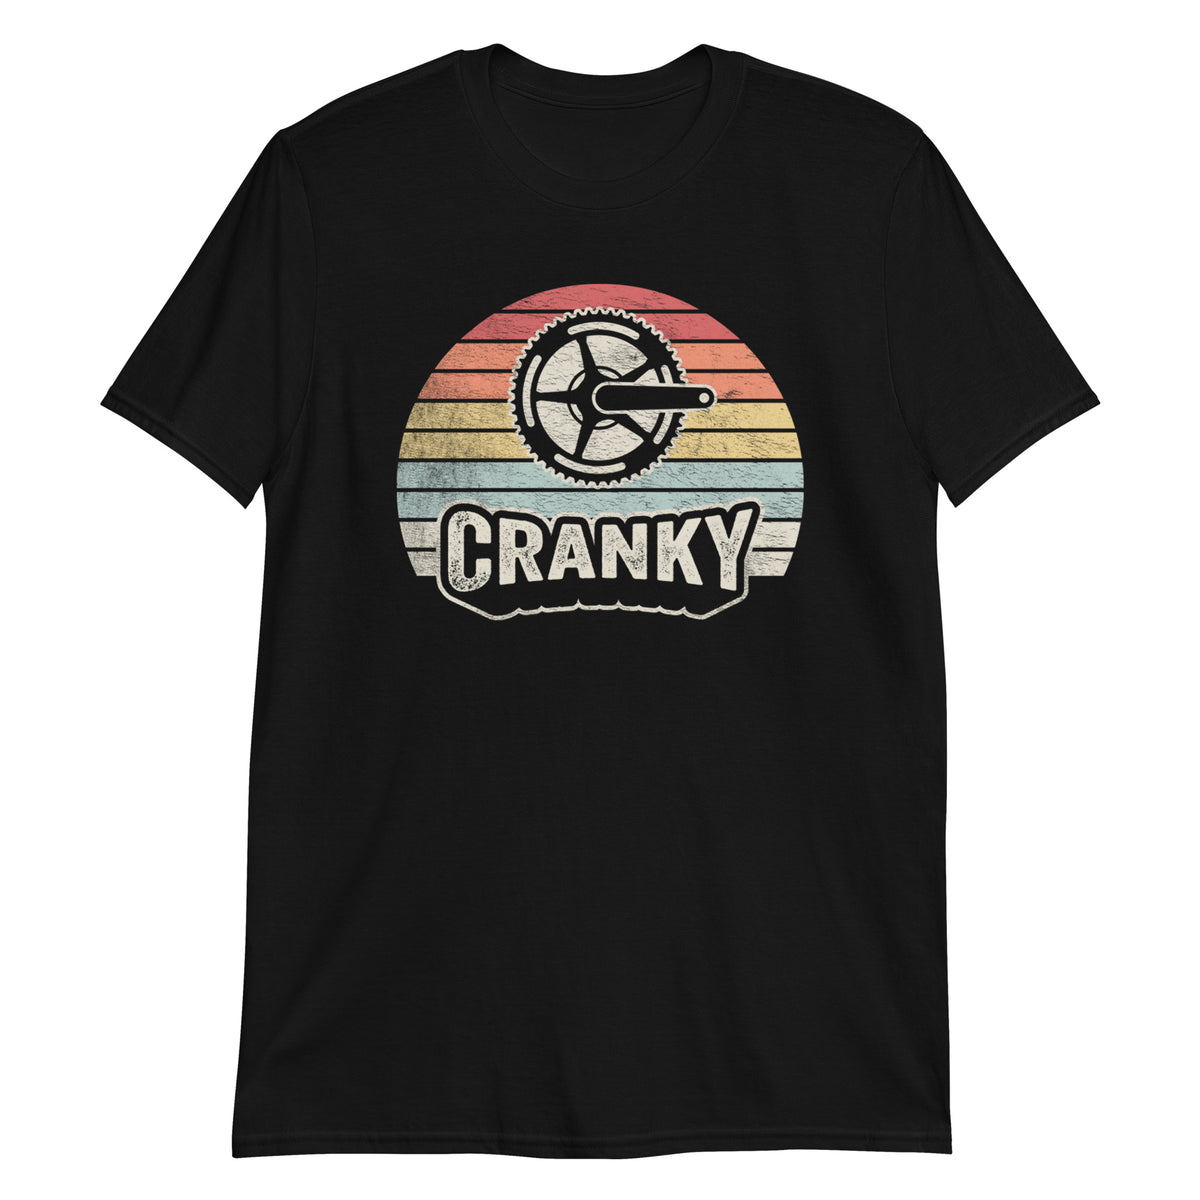 Cranky T-Shirt